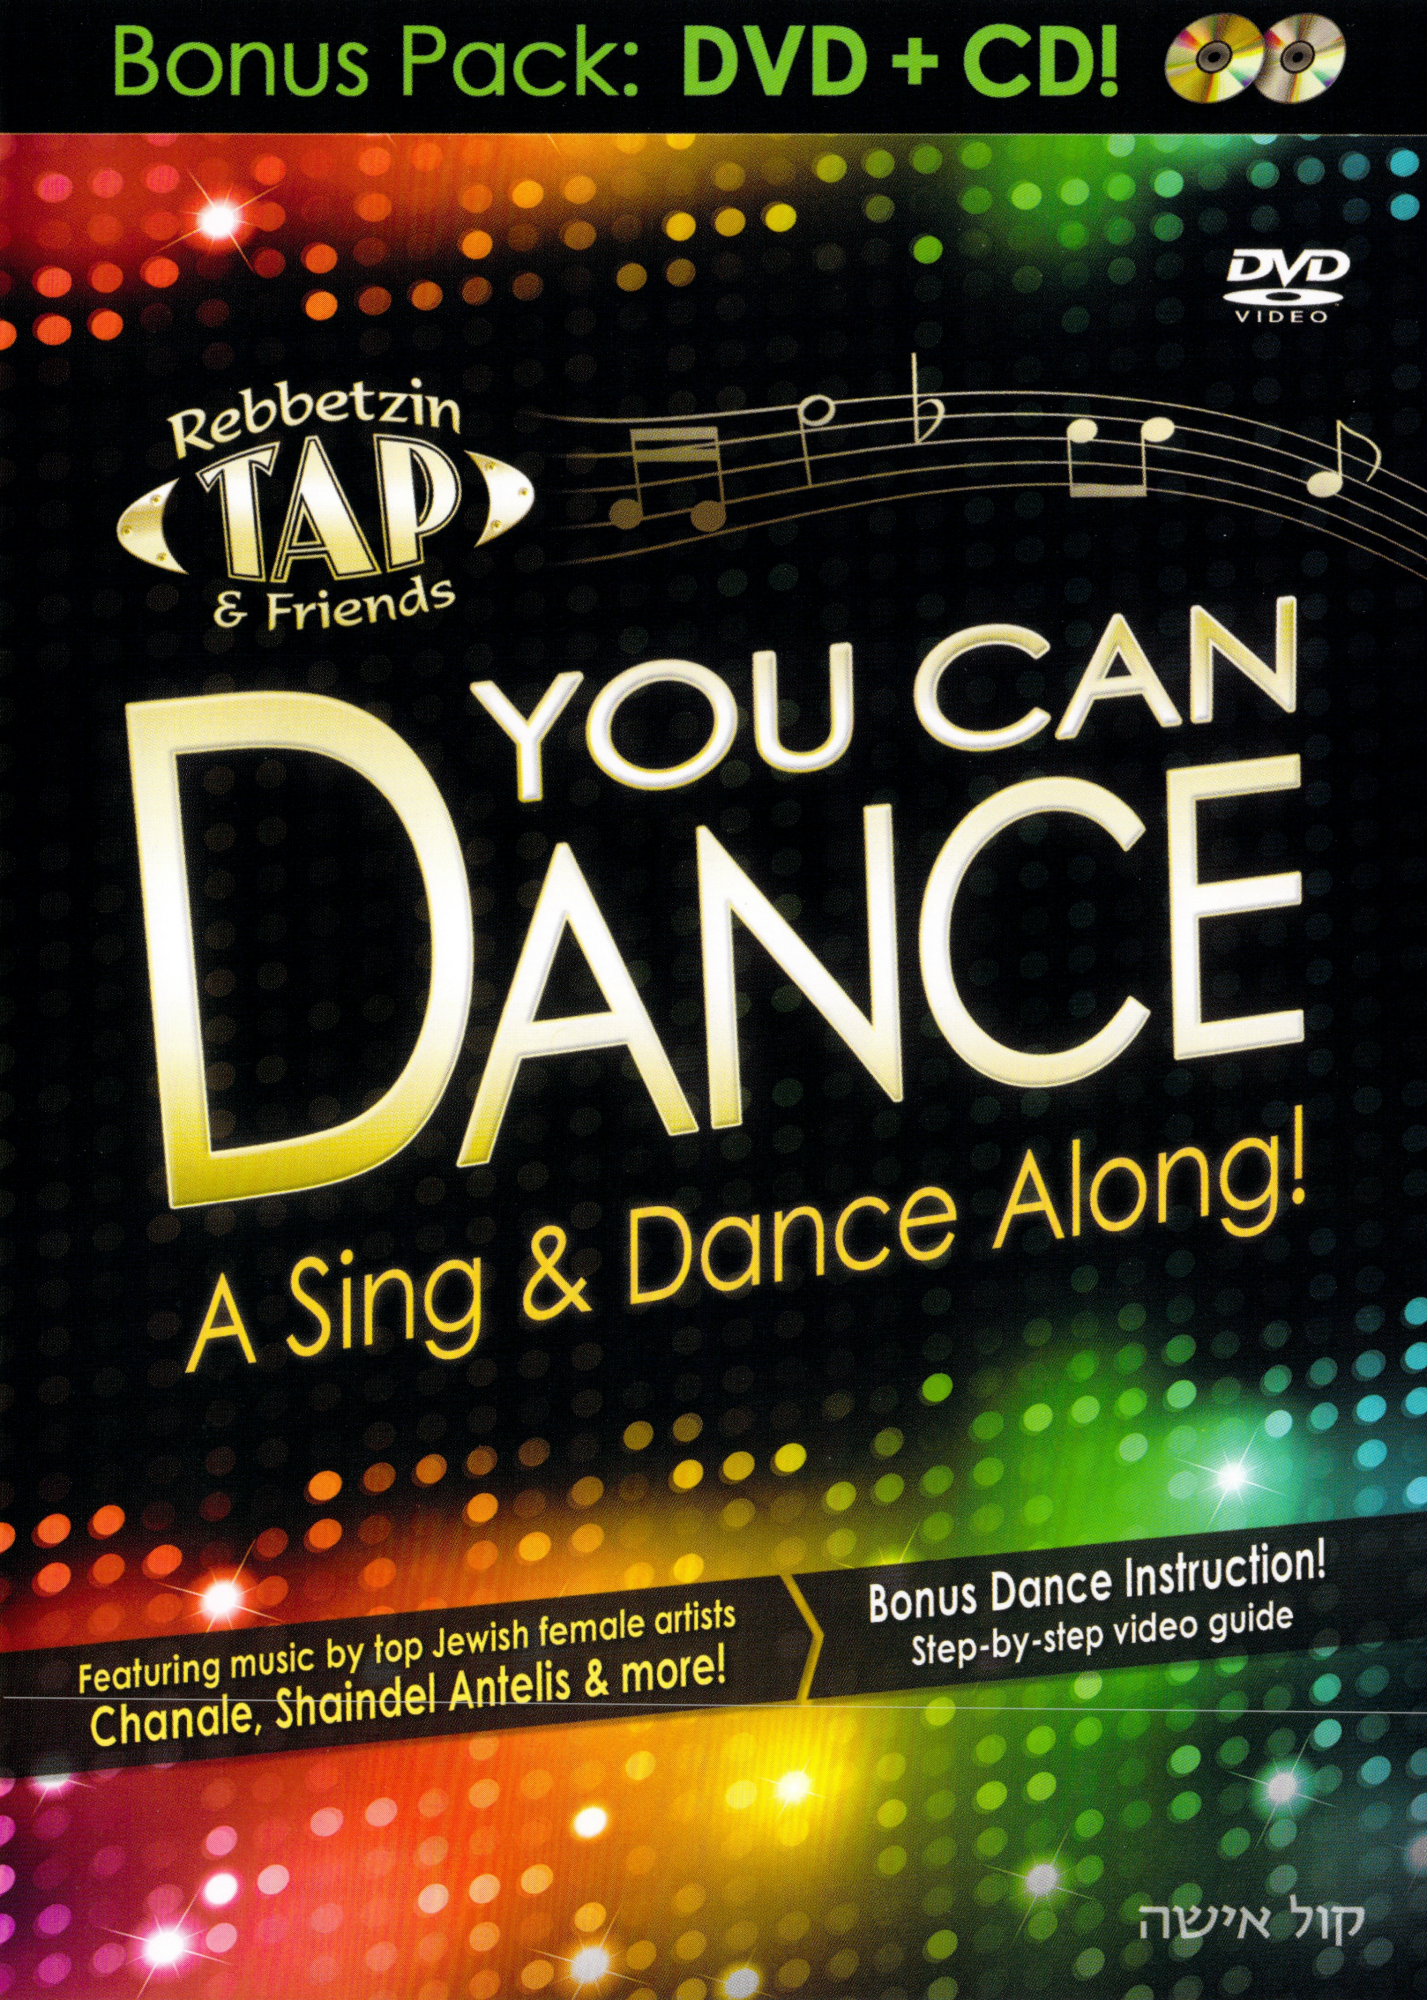 Rebbetzin Tap - Vol 3 - You Can Dance DVD+CD